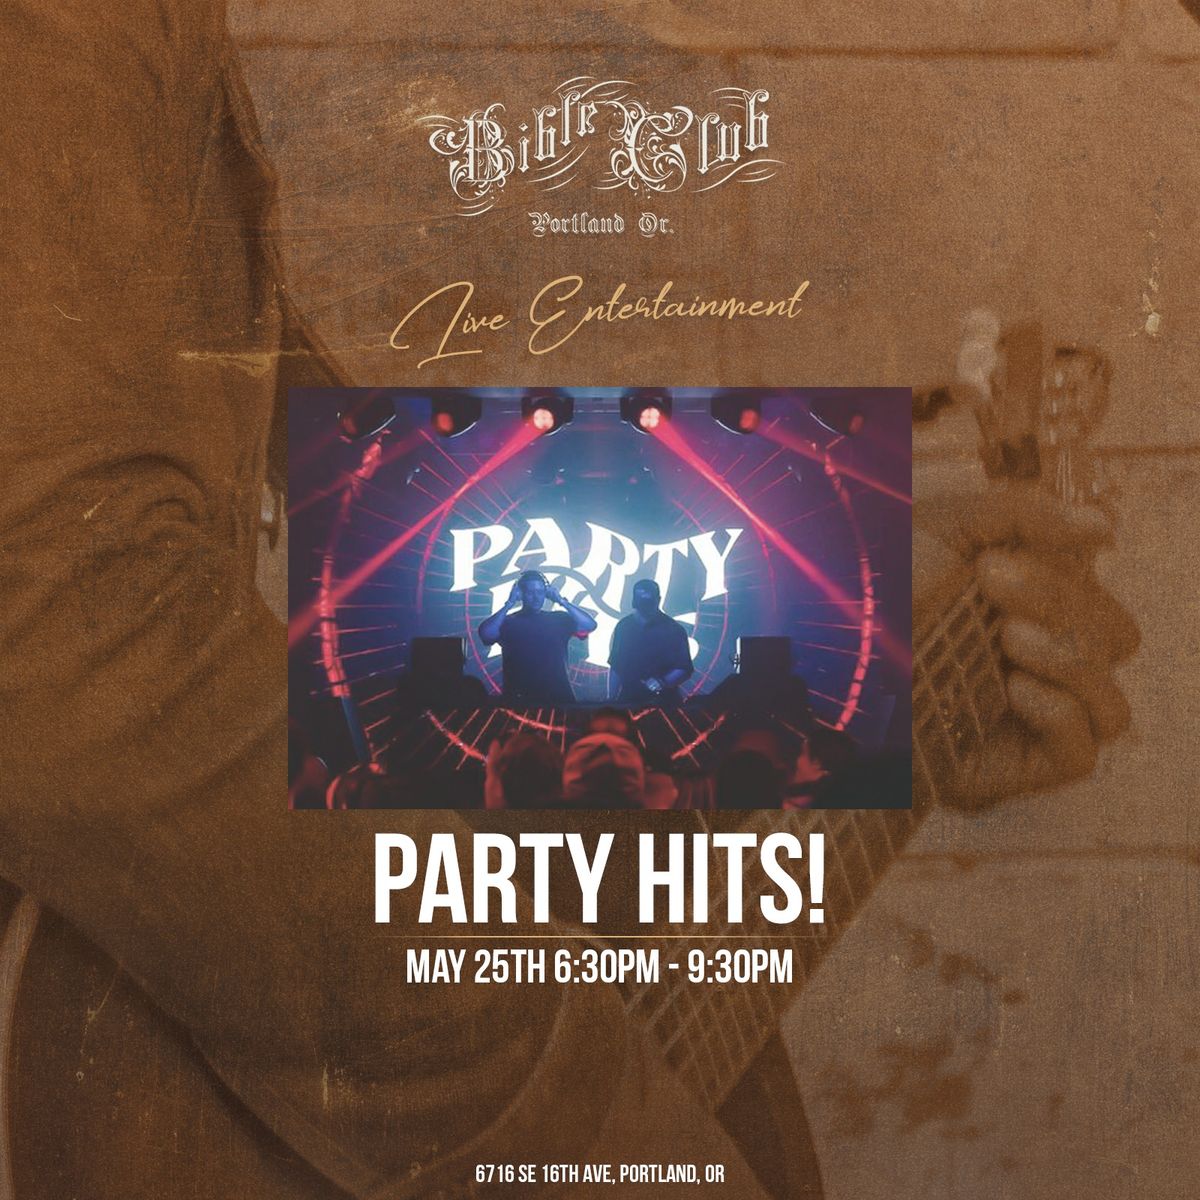 Party Hits! at Bible Club 5\/25